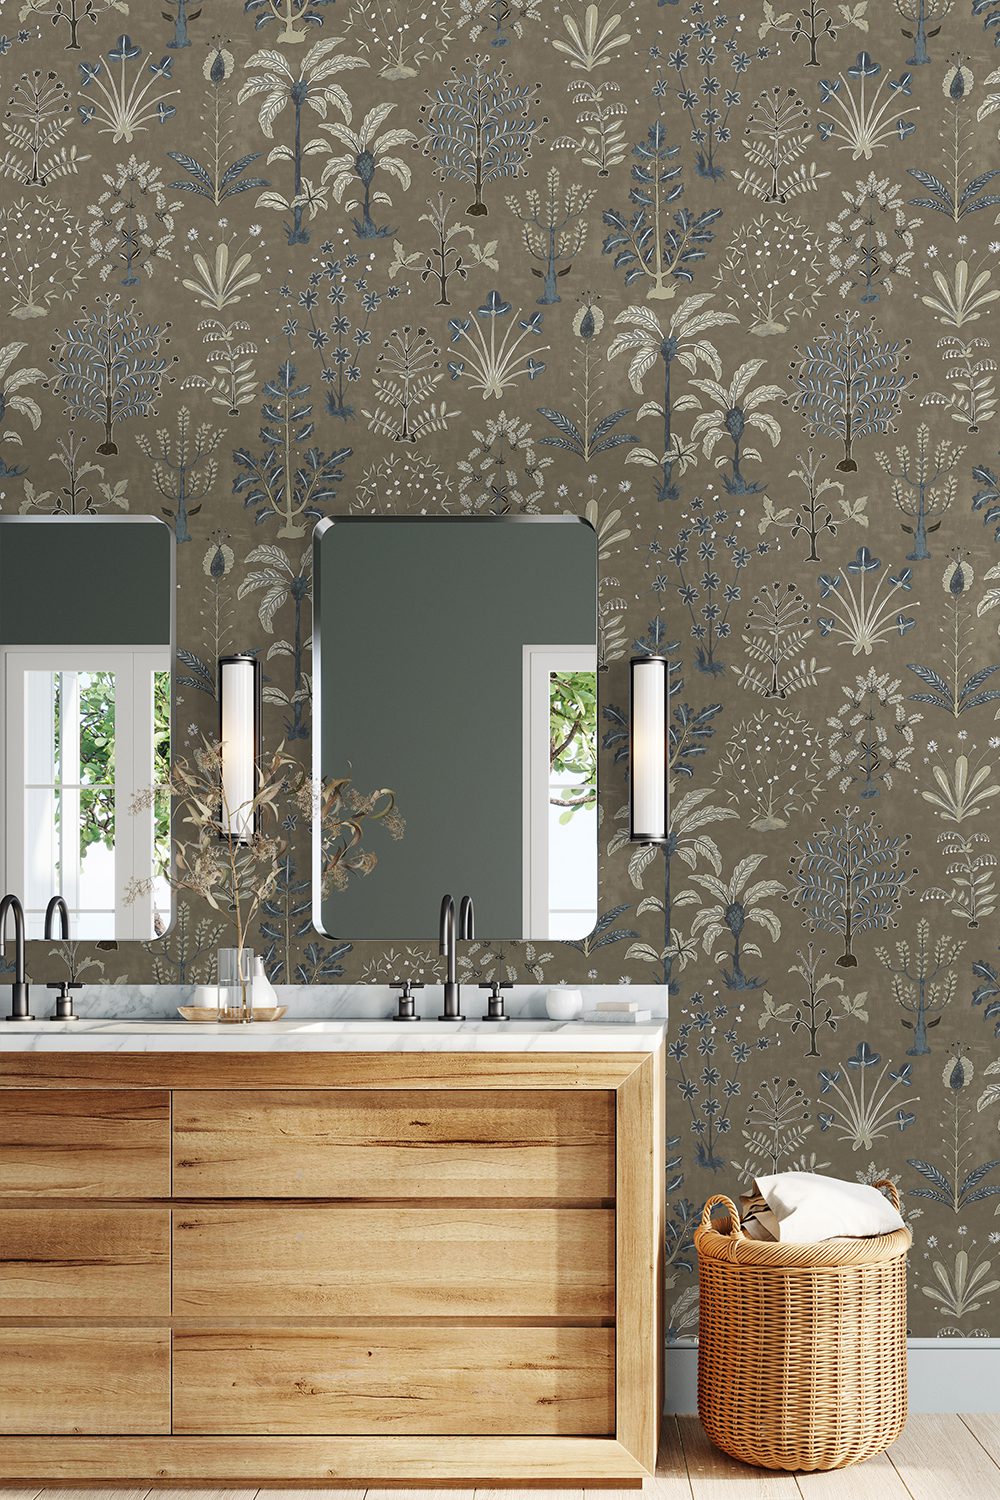 Josephine-munsey-wallpaper-cynthia-tree-soft-design-brown-neutral-beige-blue-white-nature-inspired-design-bathroom